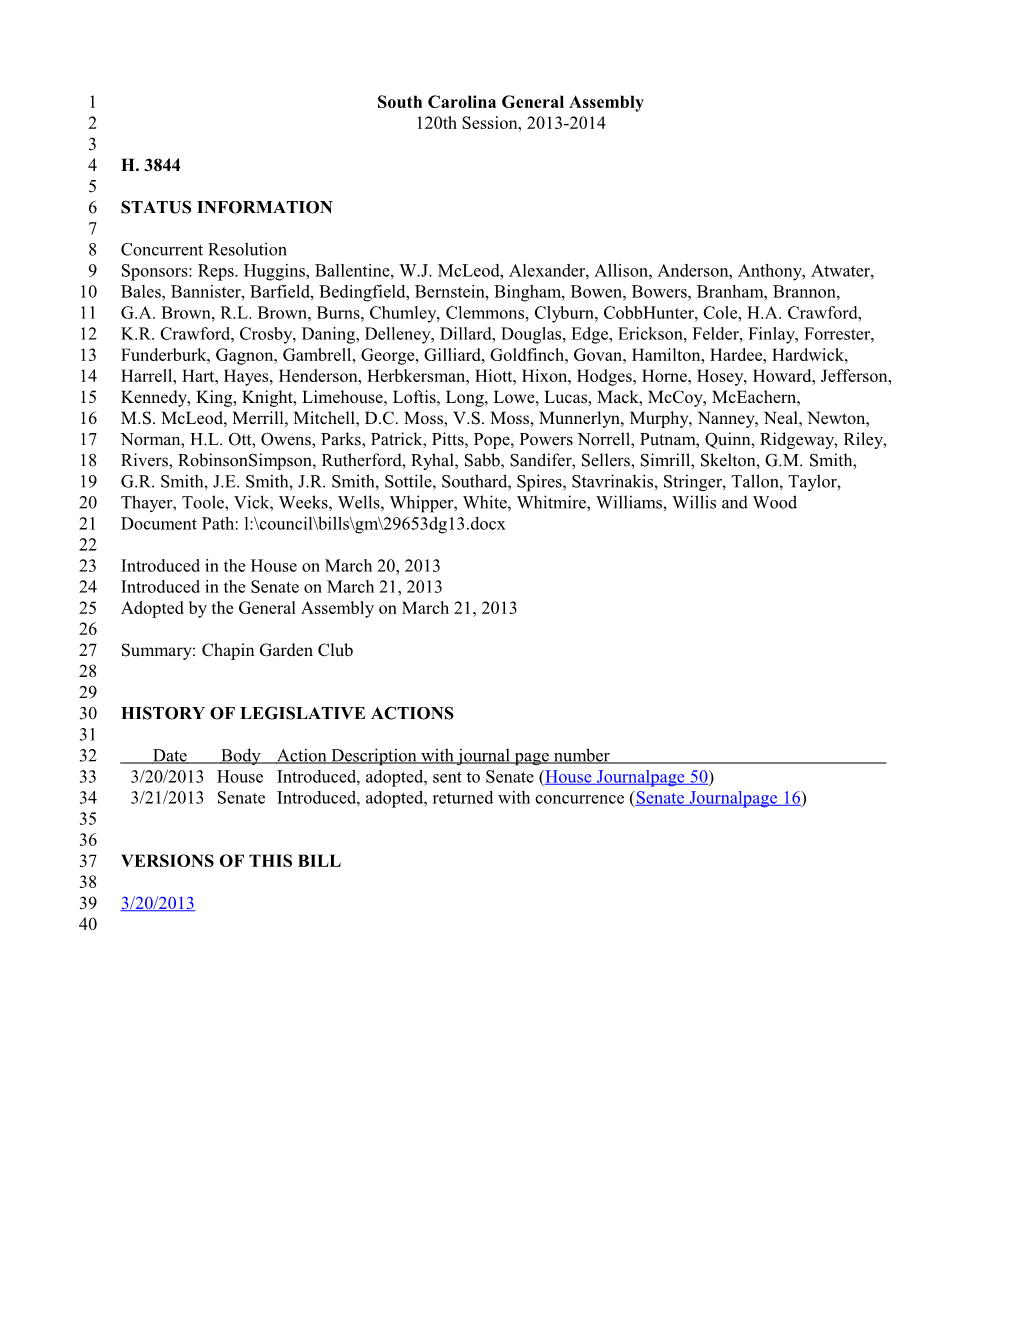 2013-2014 Bill 3844: Chapin Garden Club - South Carolina Legislature Online